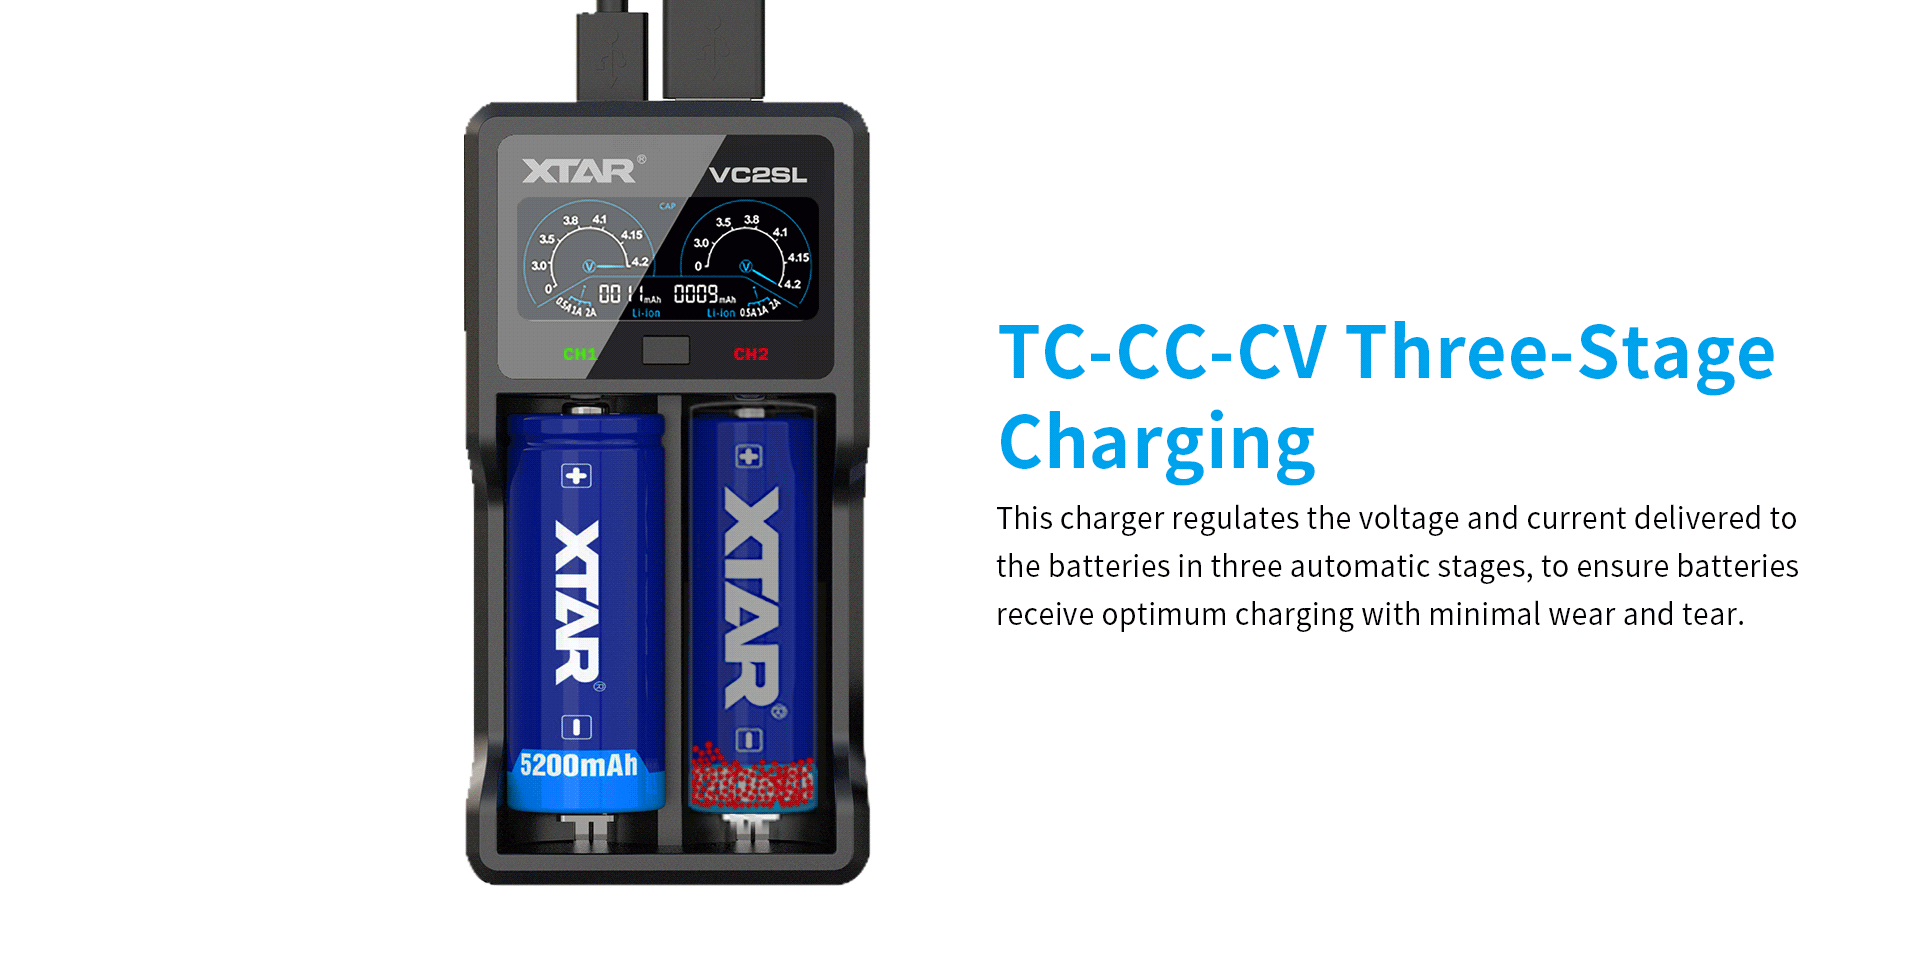 Xtar VC2SL chargeur-11